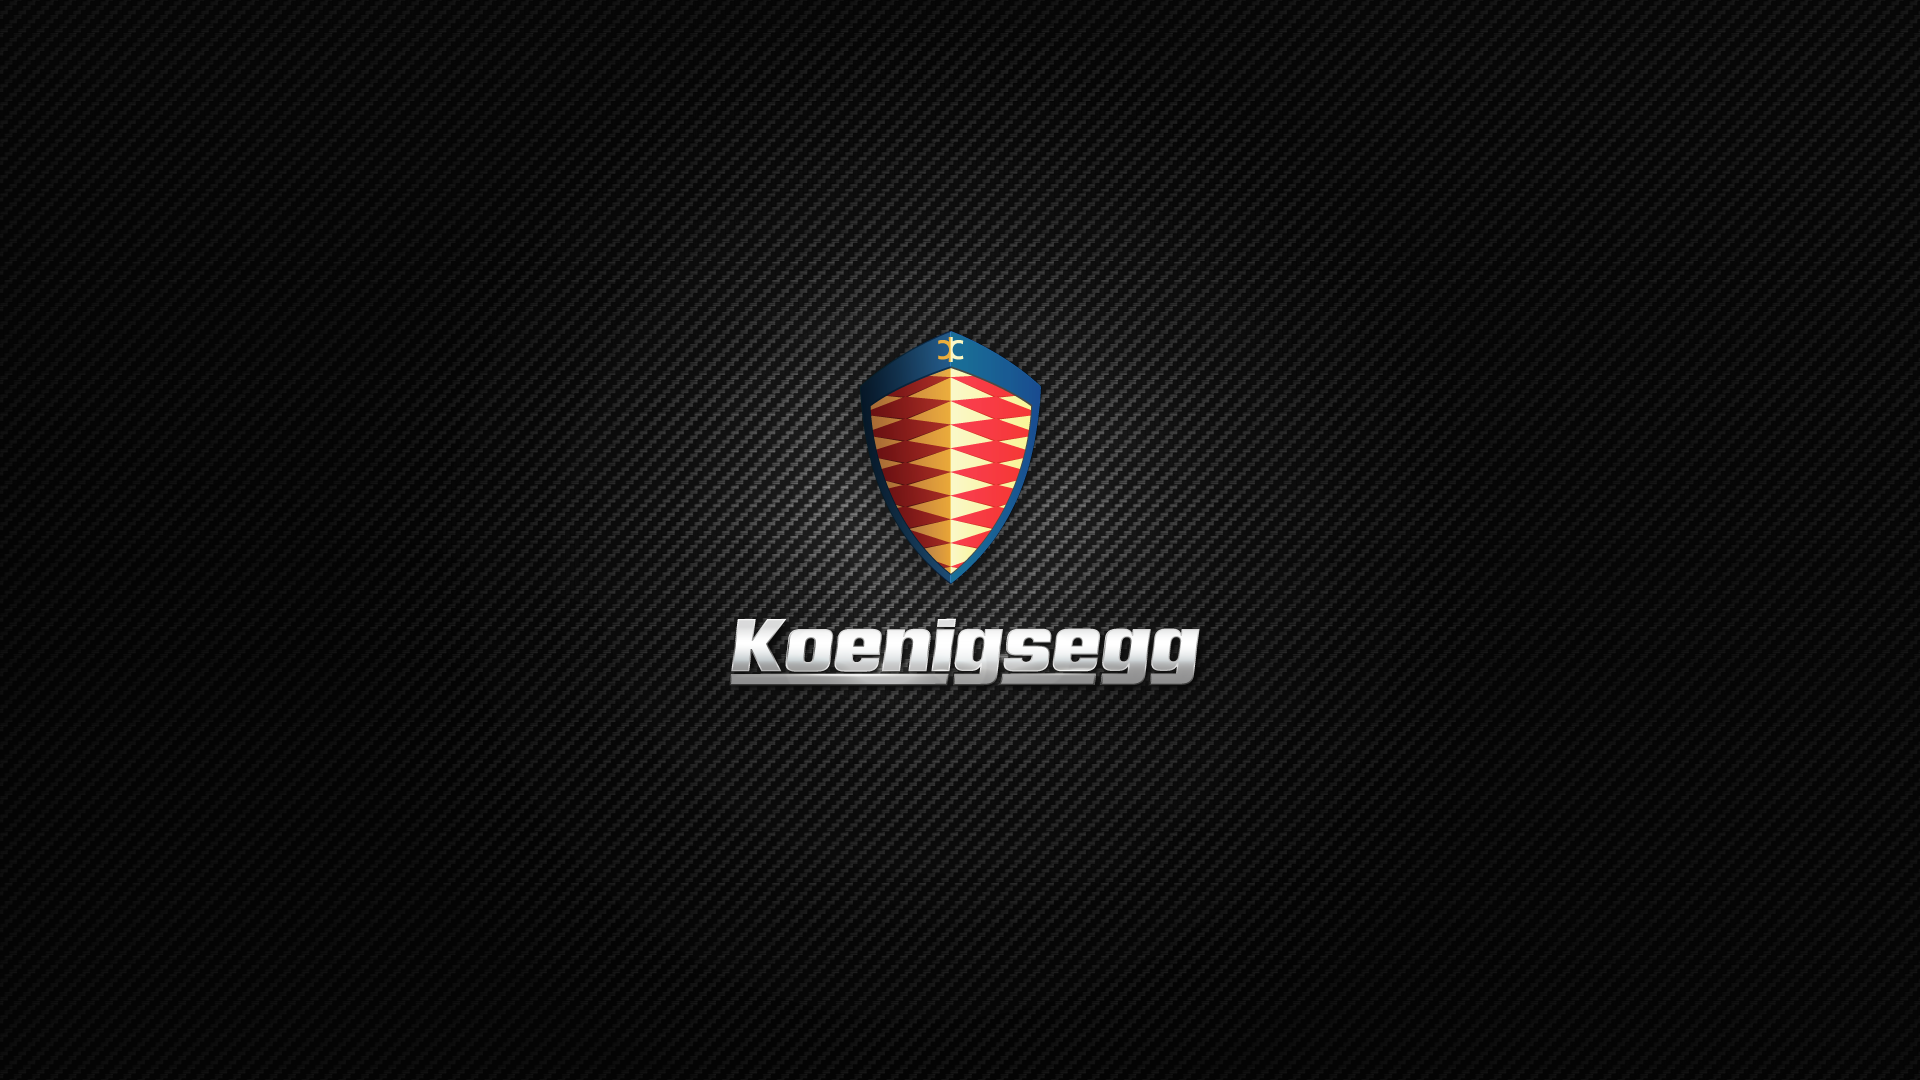 Koenigsegg Minimalism Sports Car Brands Logo Company Carbon Fiber 1920x1080